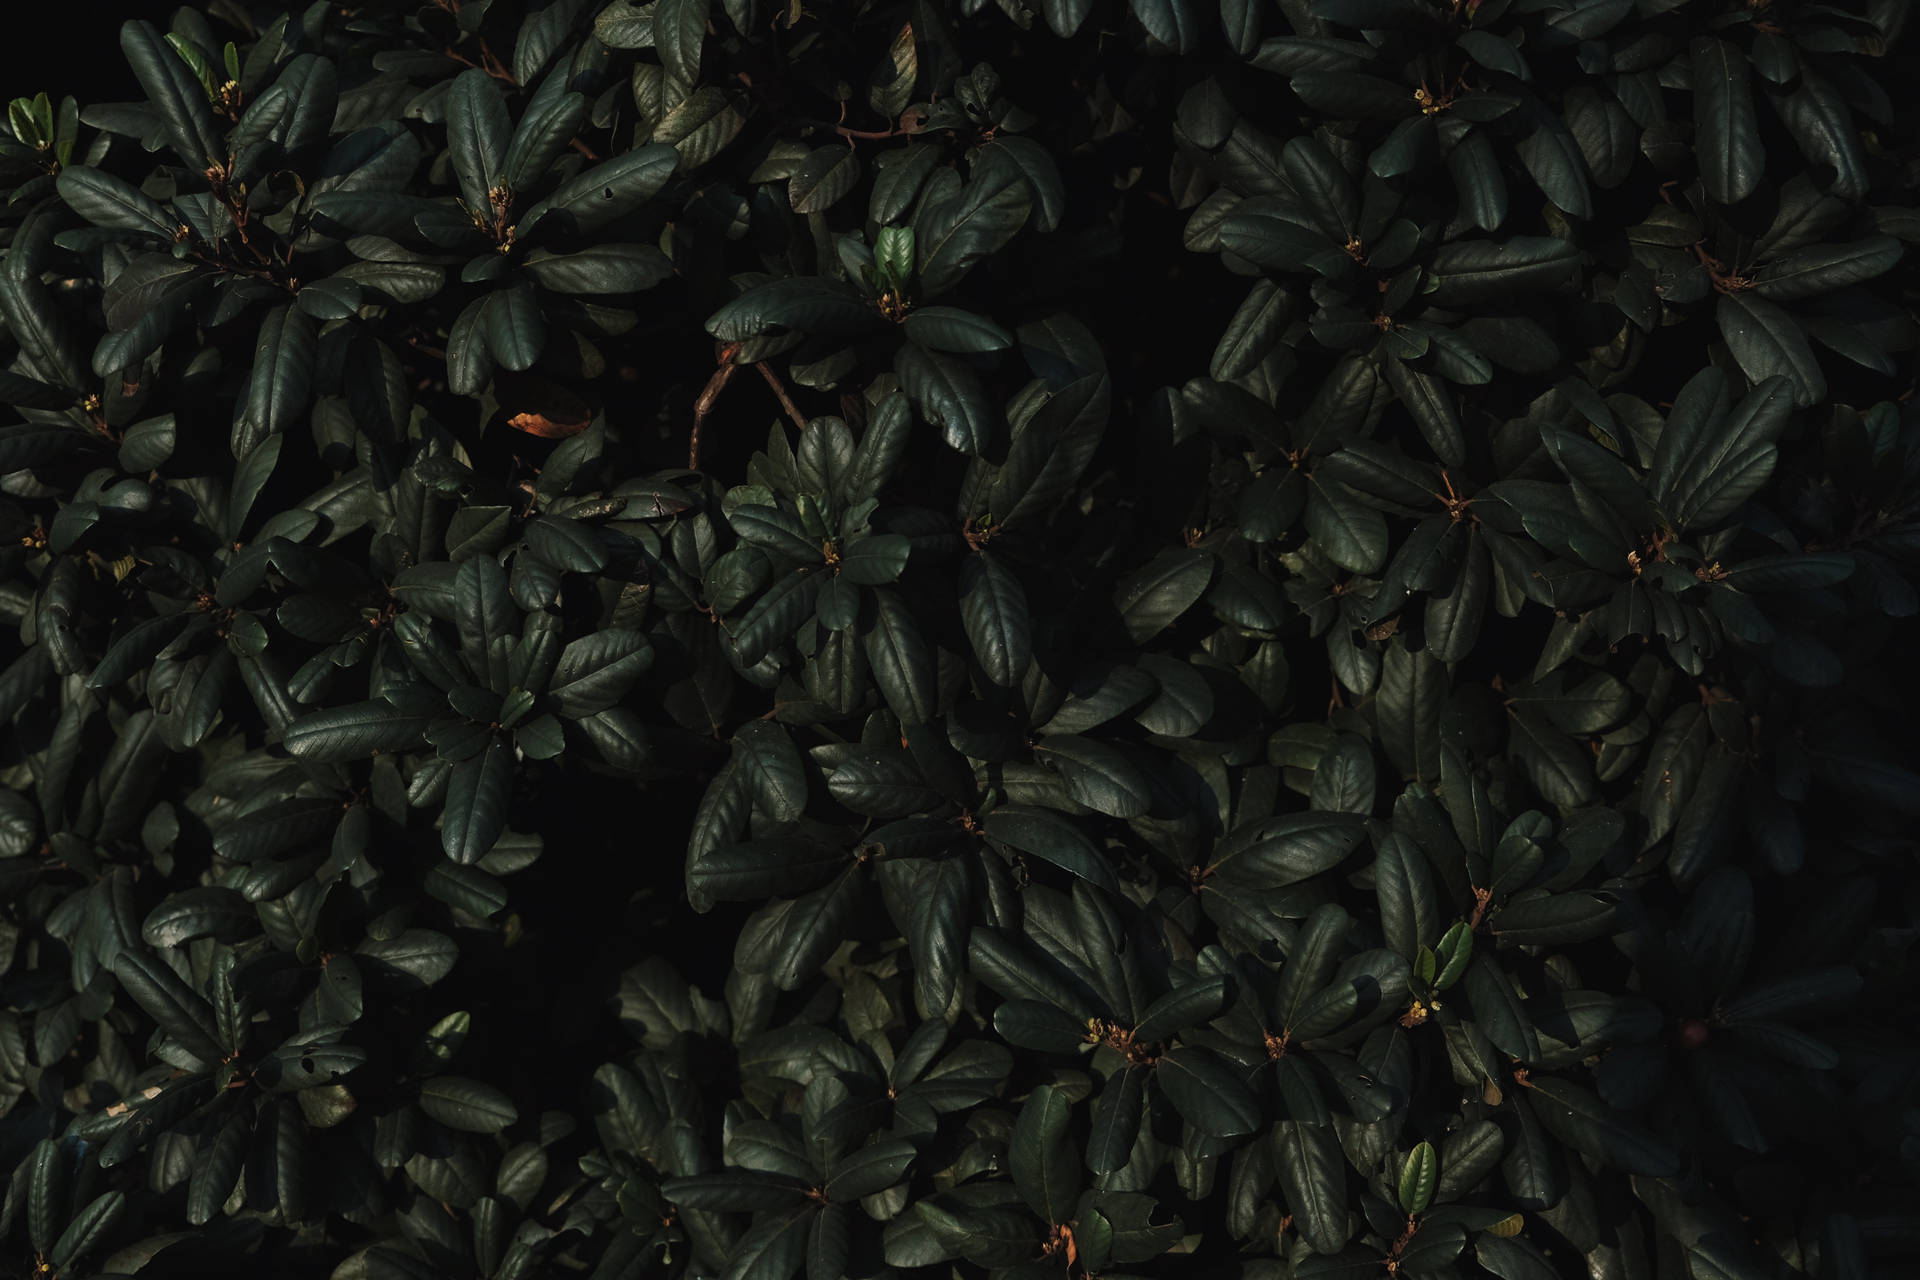 Dark Green Leaves Background